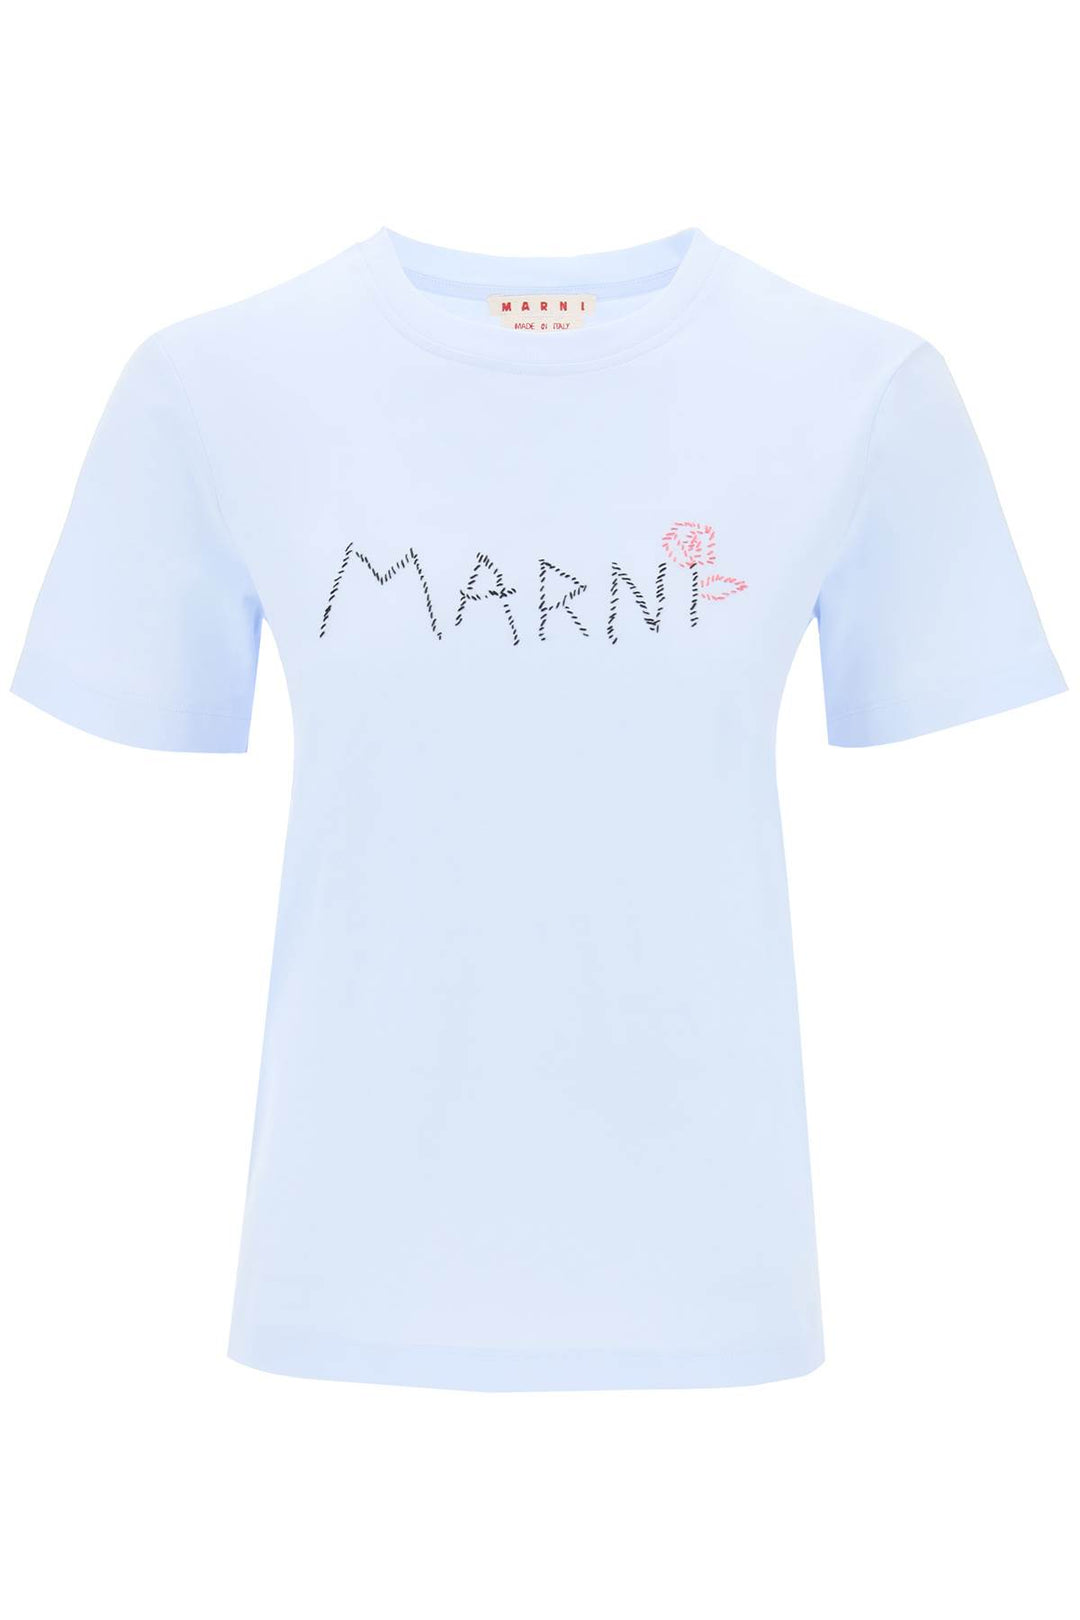 Marni Hand Embroidered Logo T Shirt   Celeste